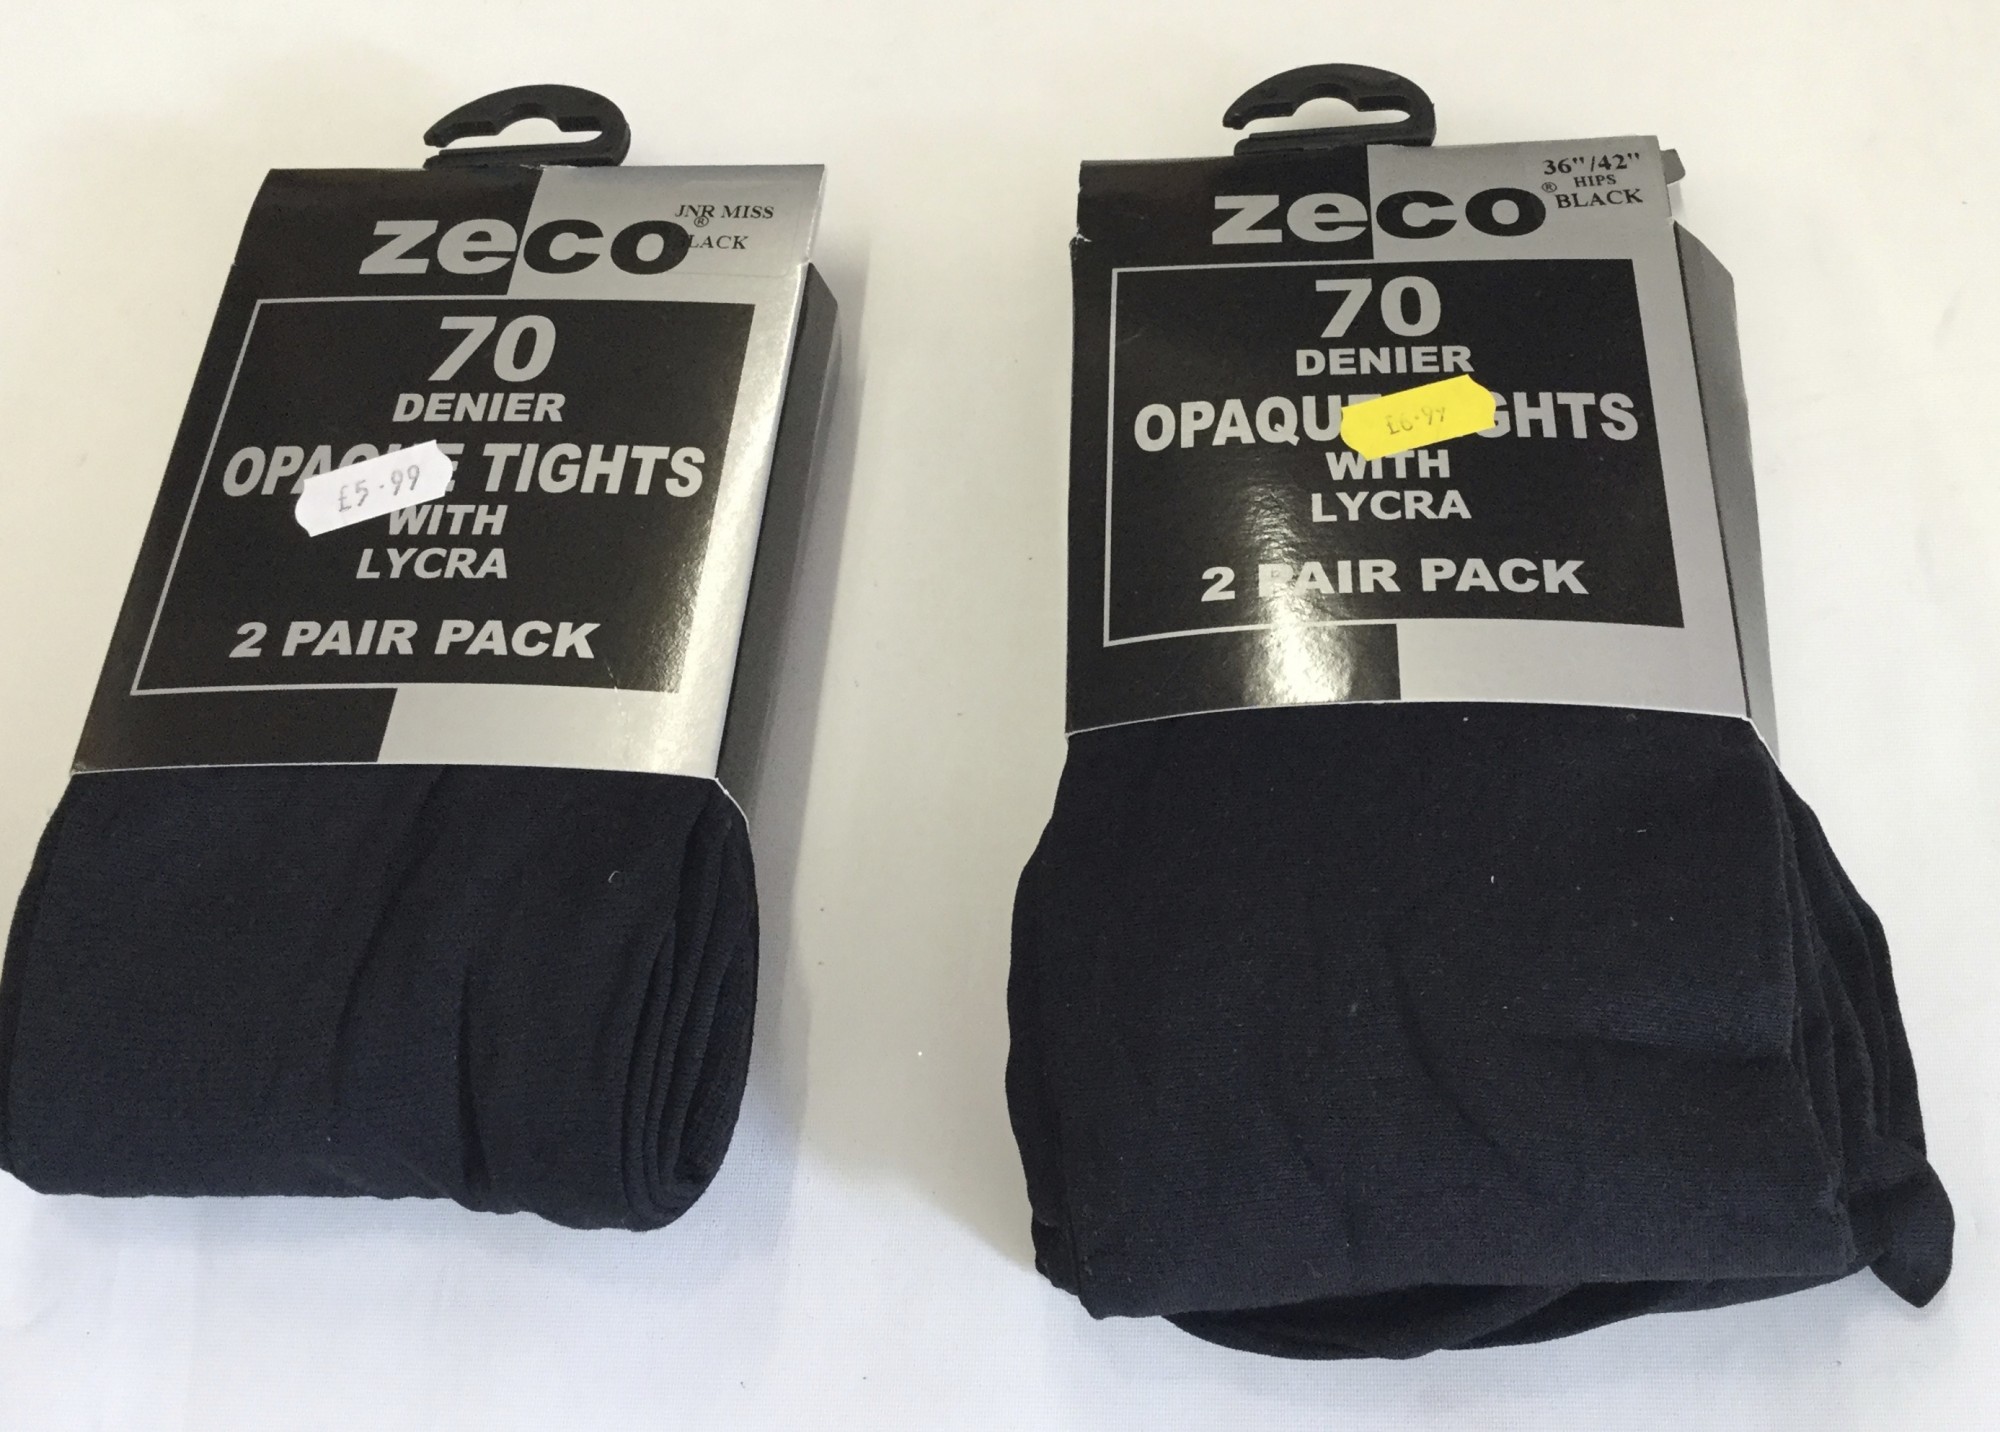 Pex 2 Pair Pack Black Opaque 70 Denier Tights